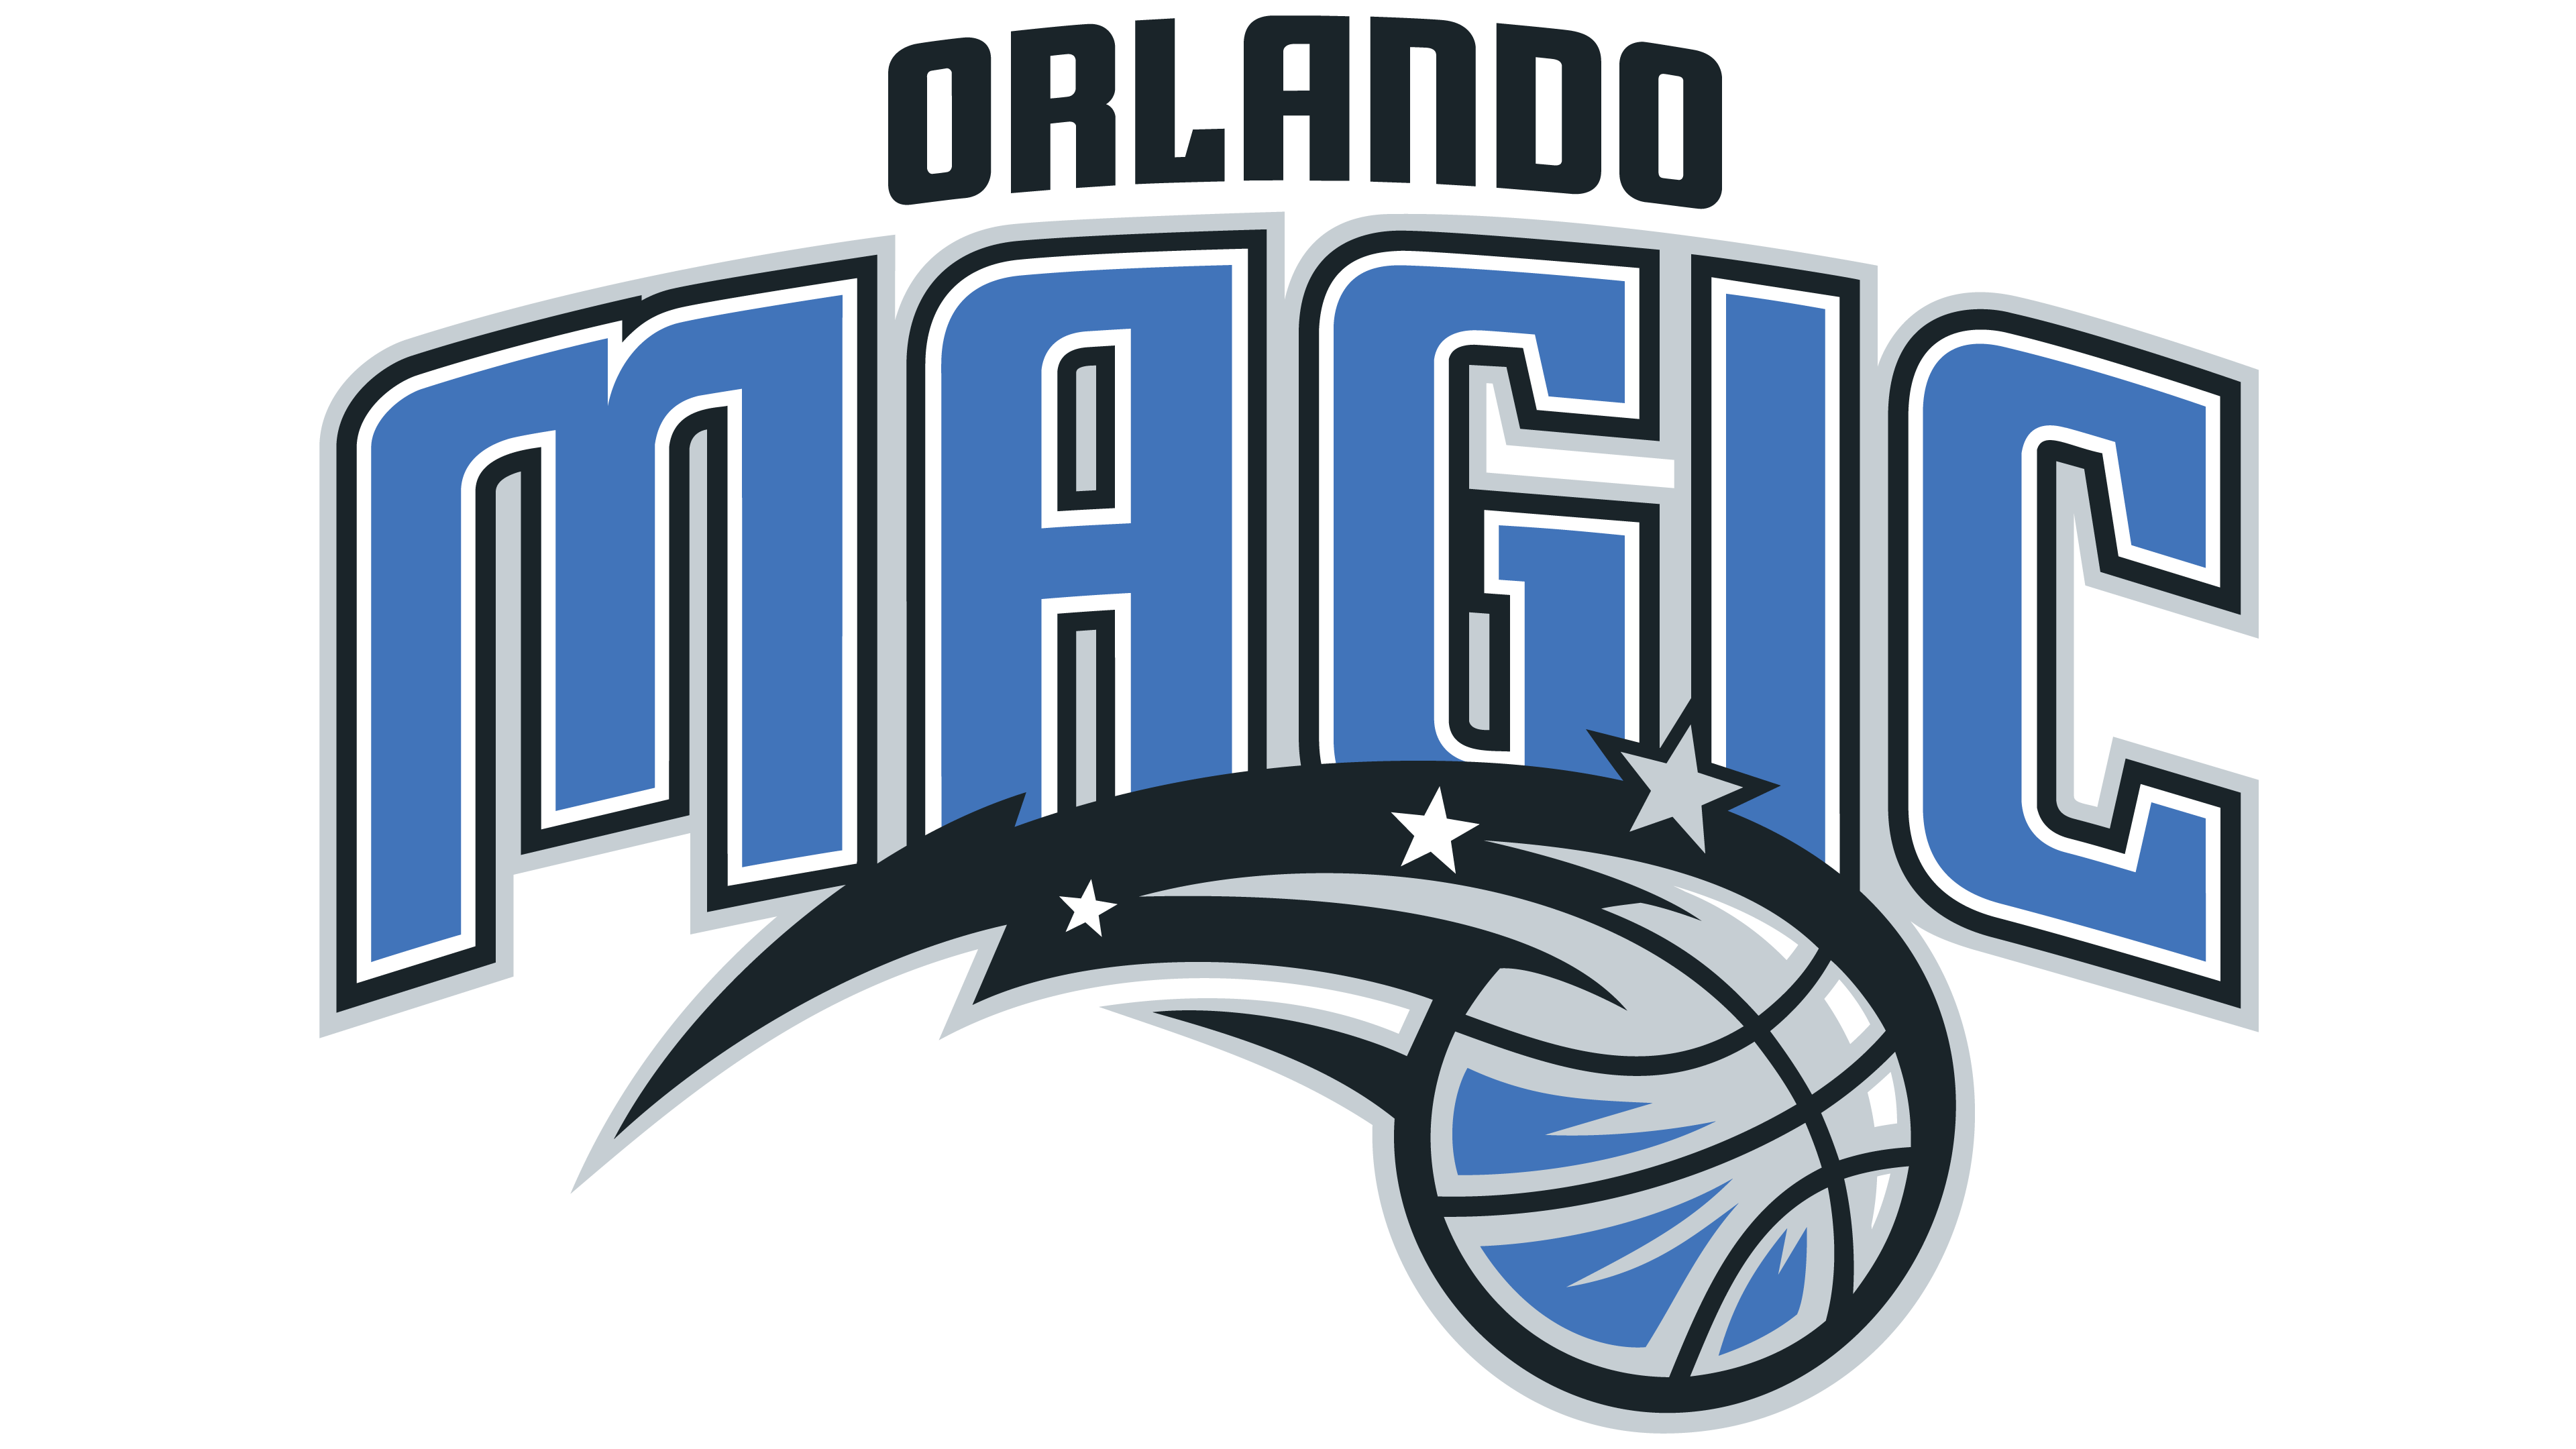 Orlando Logo - Orlando Magic Logo - Interesting History of the Team Name and emblem